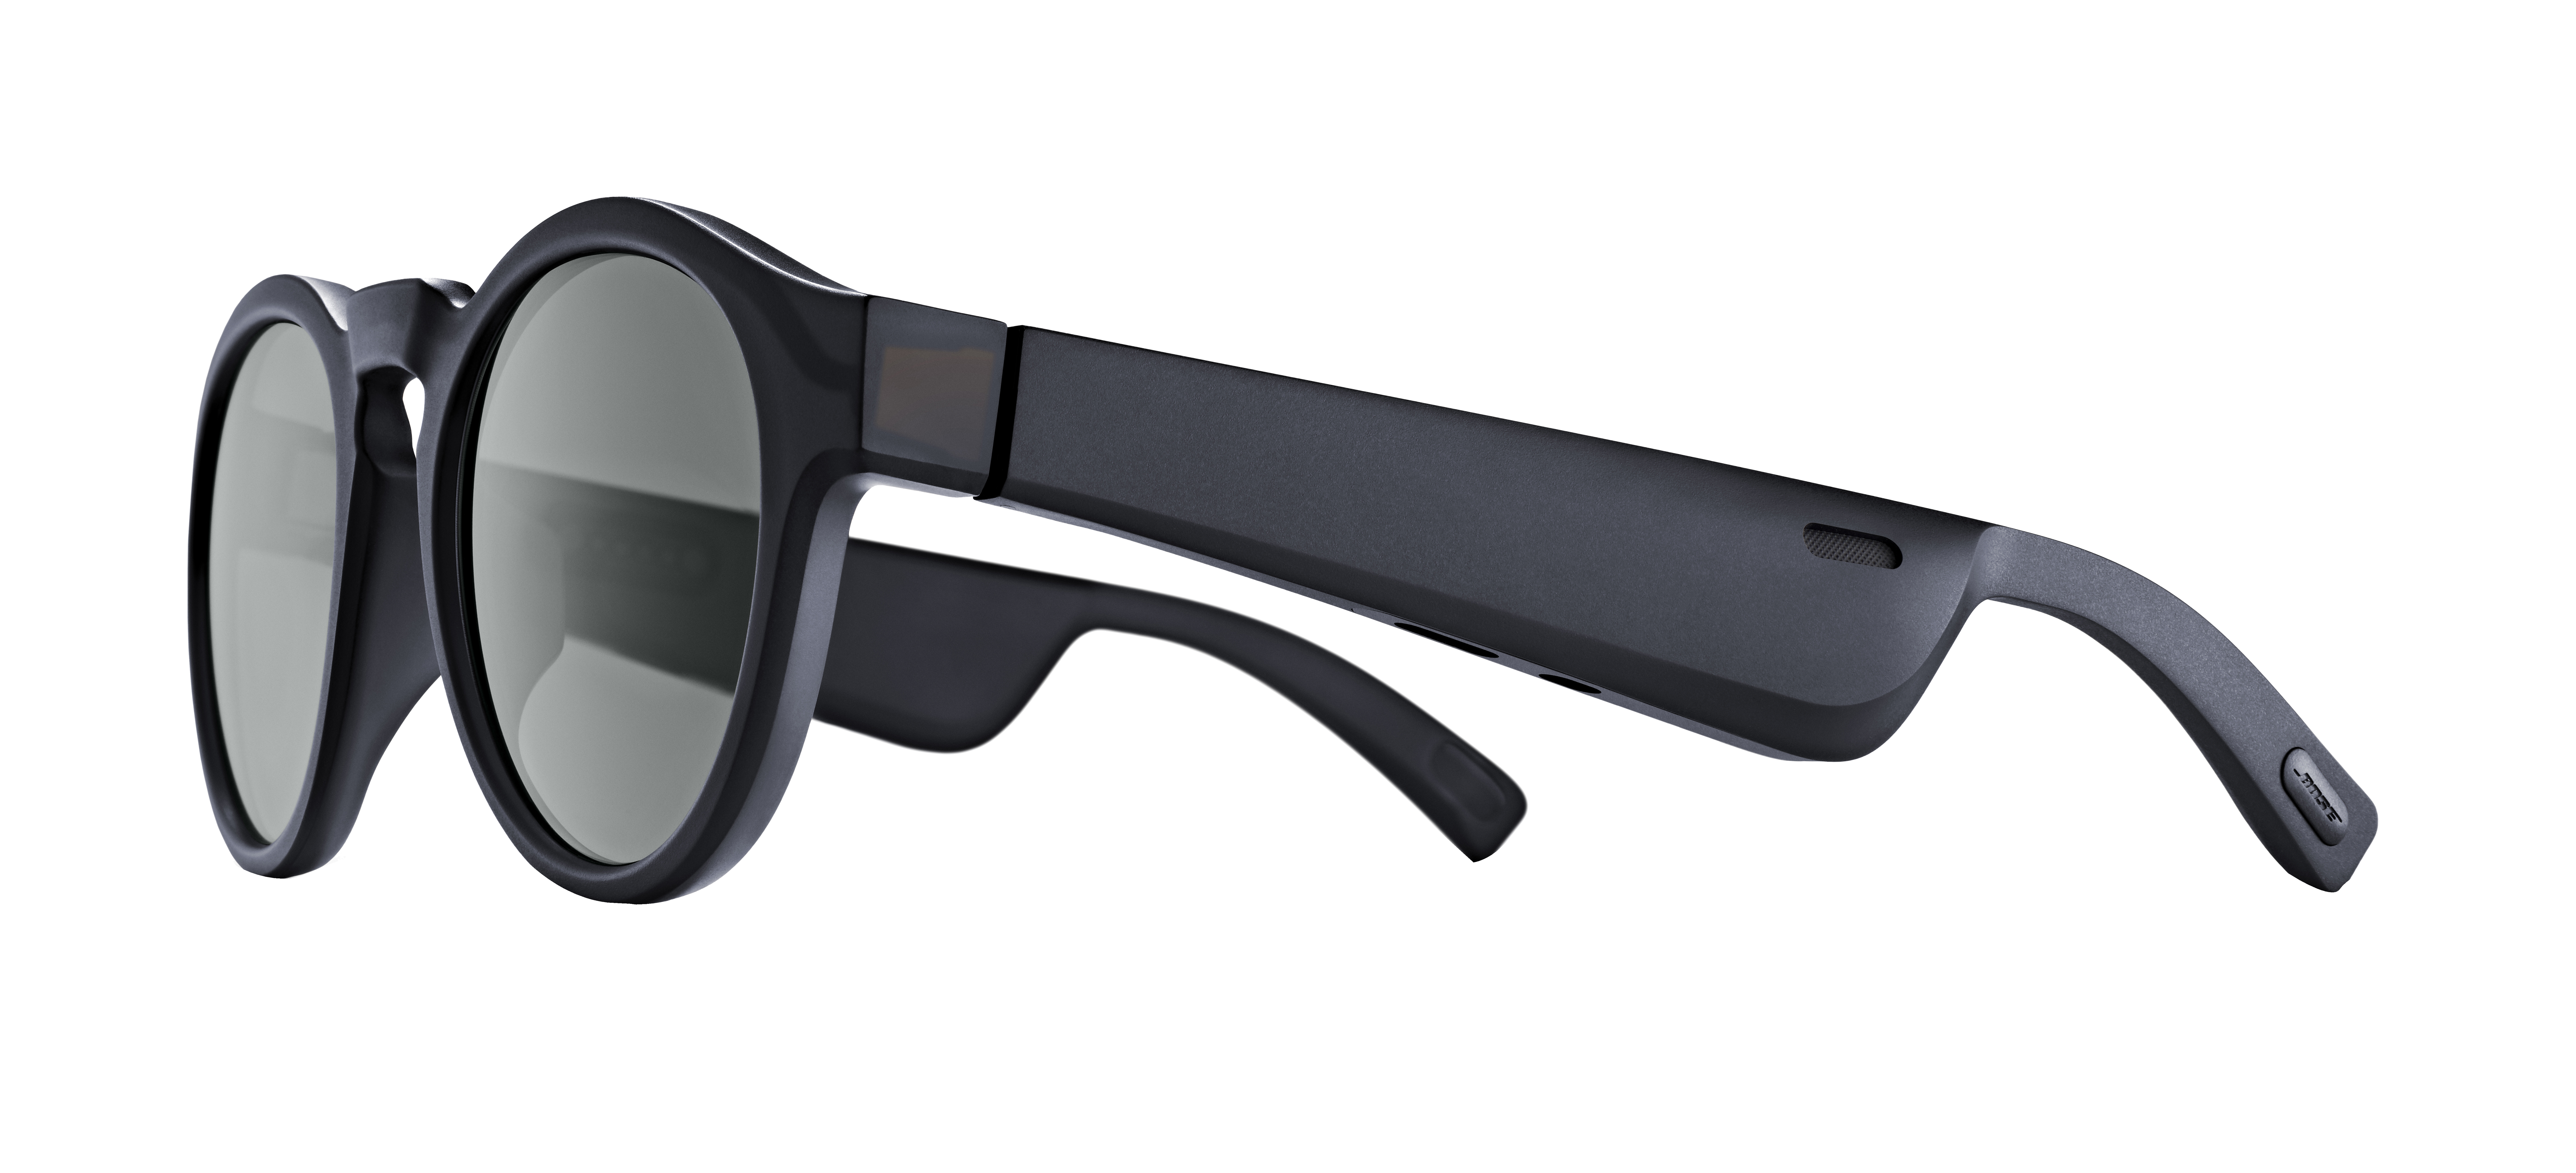 tsc.ca - Bose Frames Rondo Bluetooth Audio Sunglasses